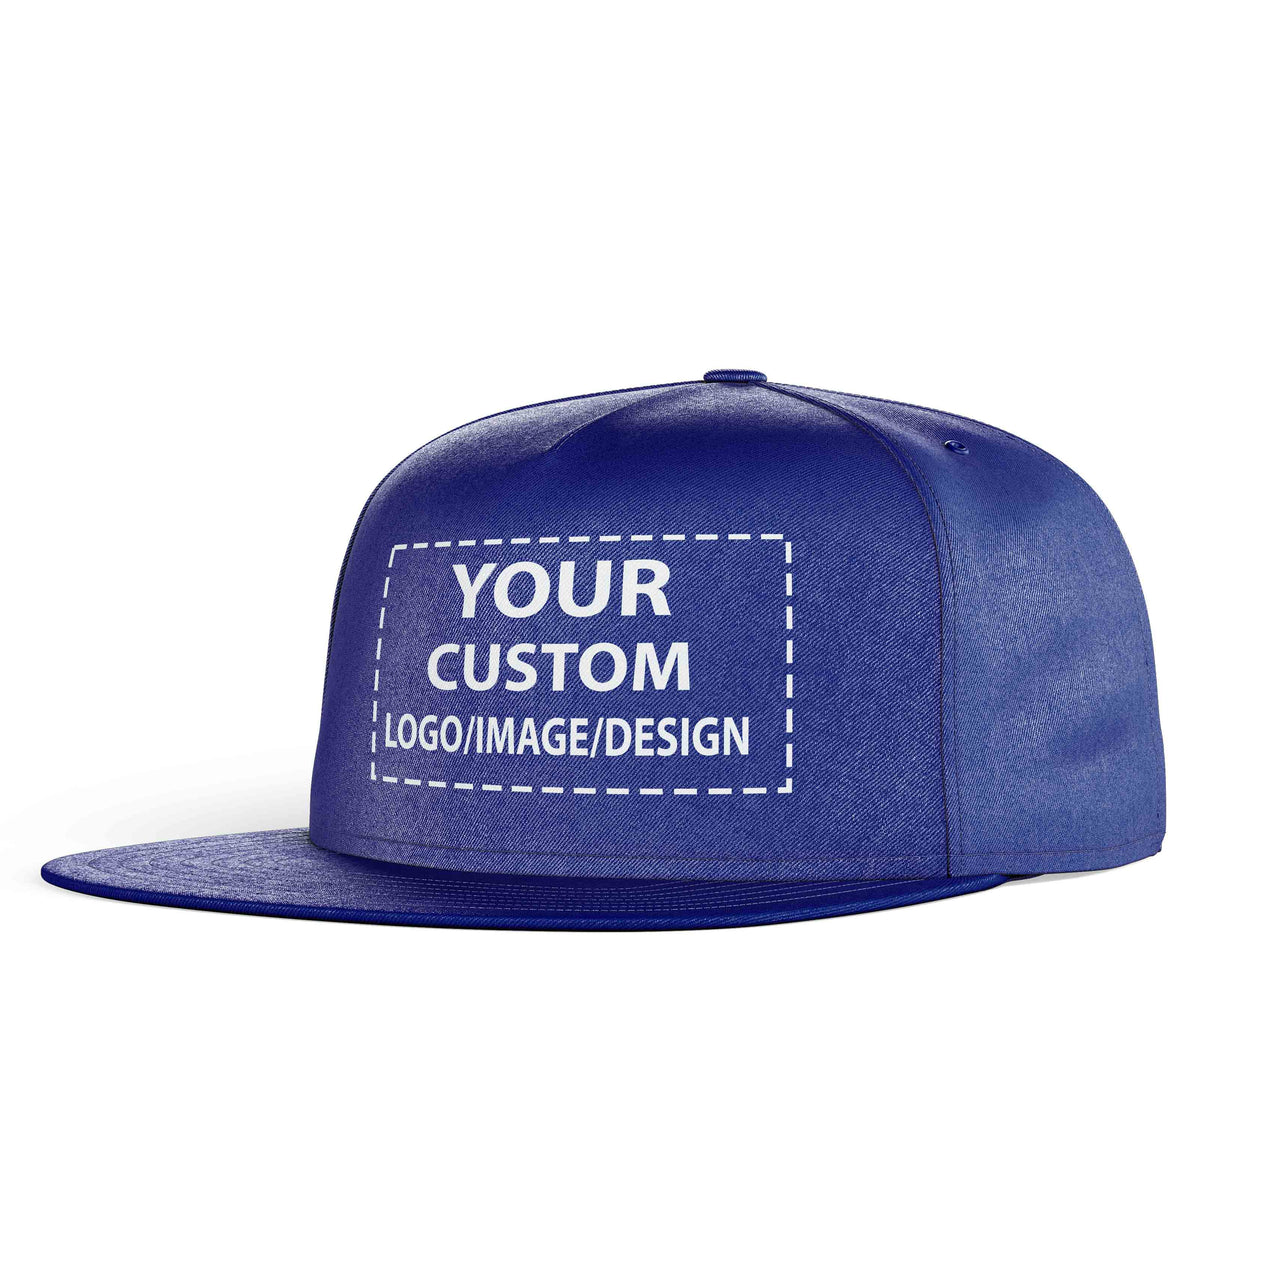 Custom Logo/Design/Image Designed Snapback Caps & Hats